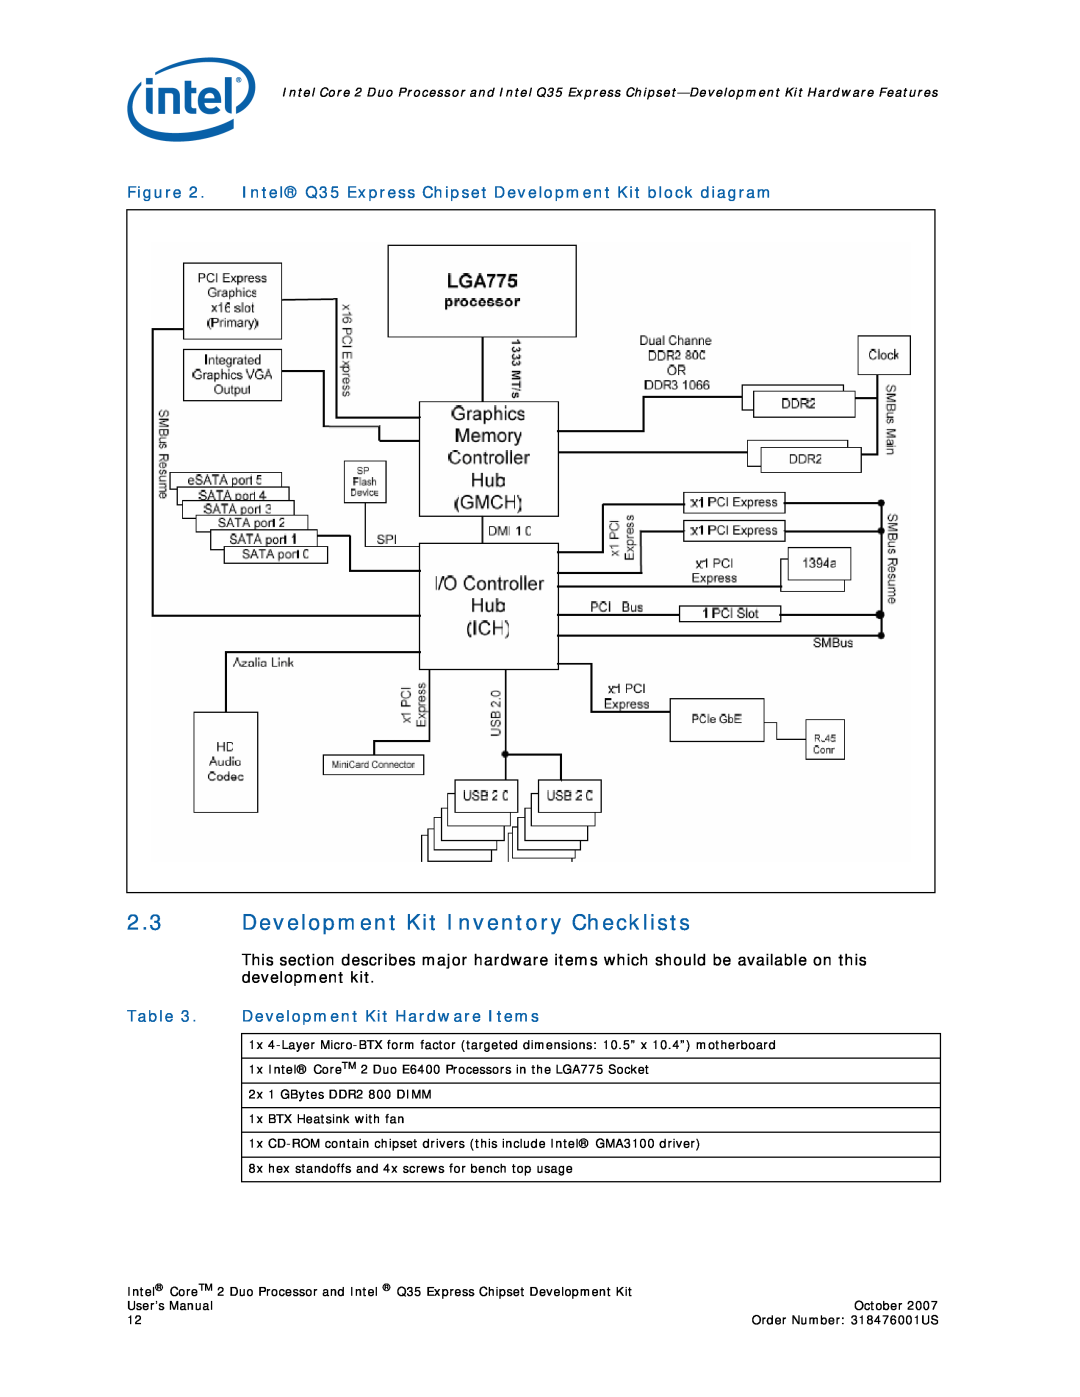 Intel Core 2 Duo user manual Development Kit Inventory Checklists, Intel Q35 Express Chipset Development Kit block diagram 